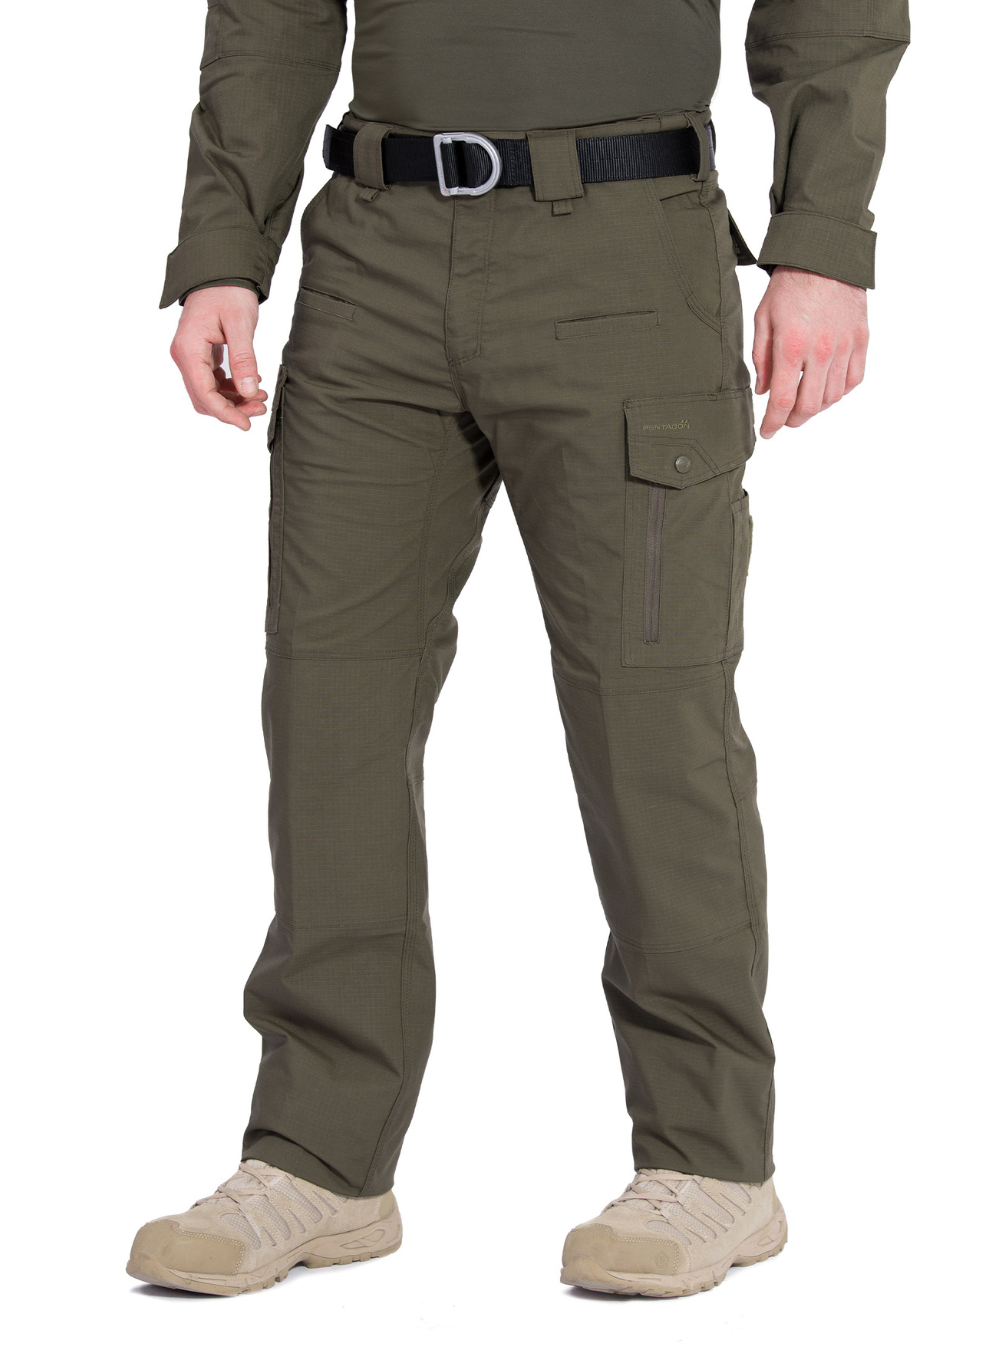 Pentagon Tactical Ranger Pants 2.0